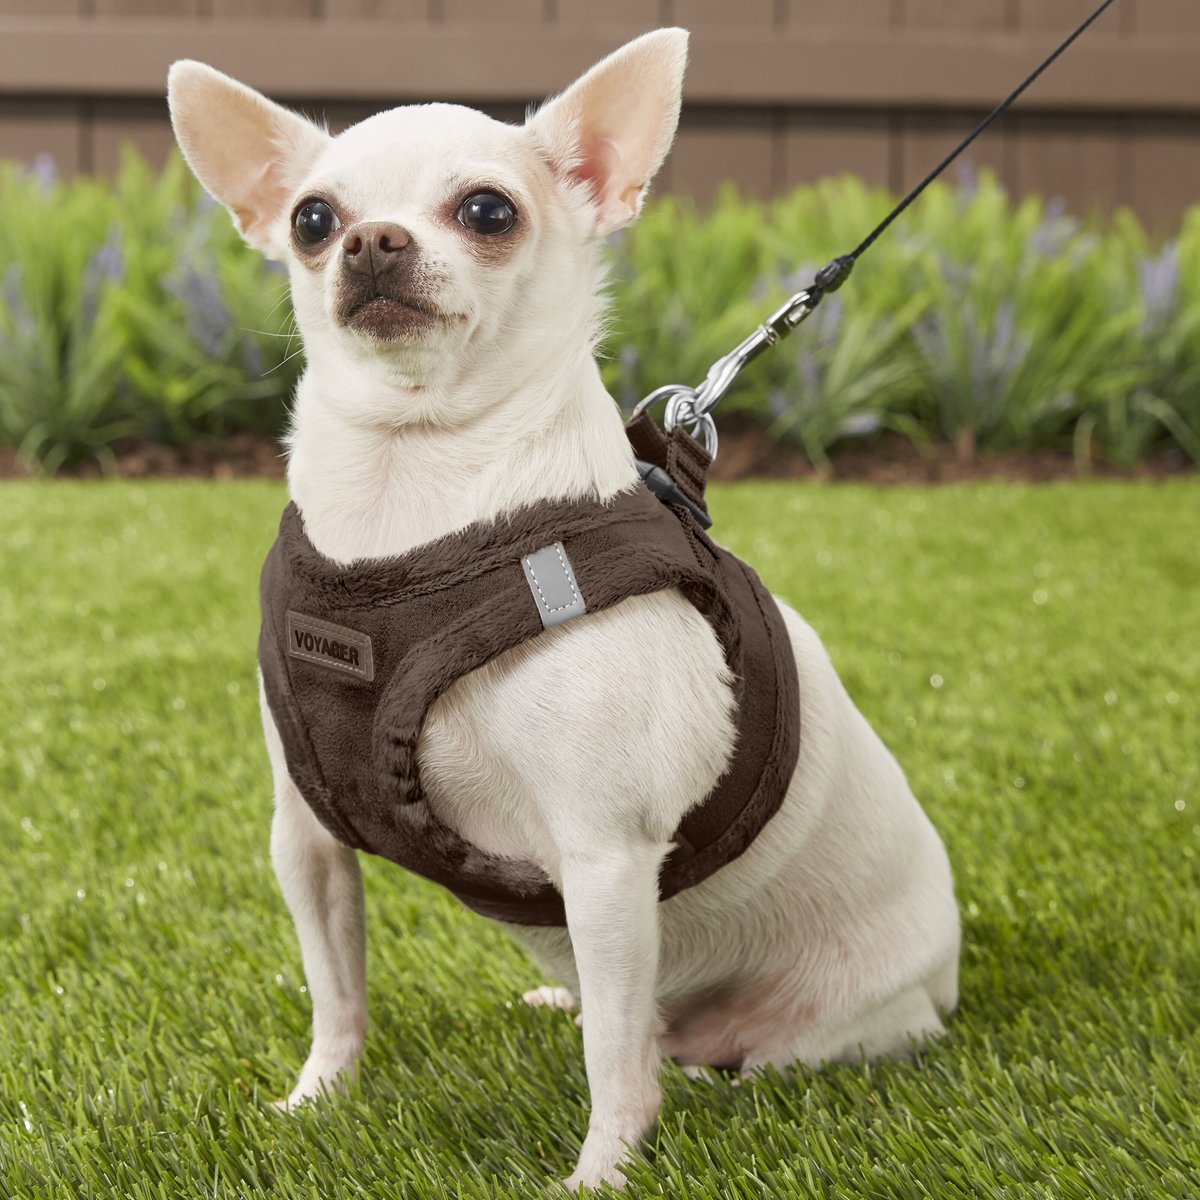 Best Pet Supplies Voyager Suede Dog Harness